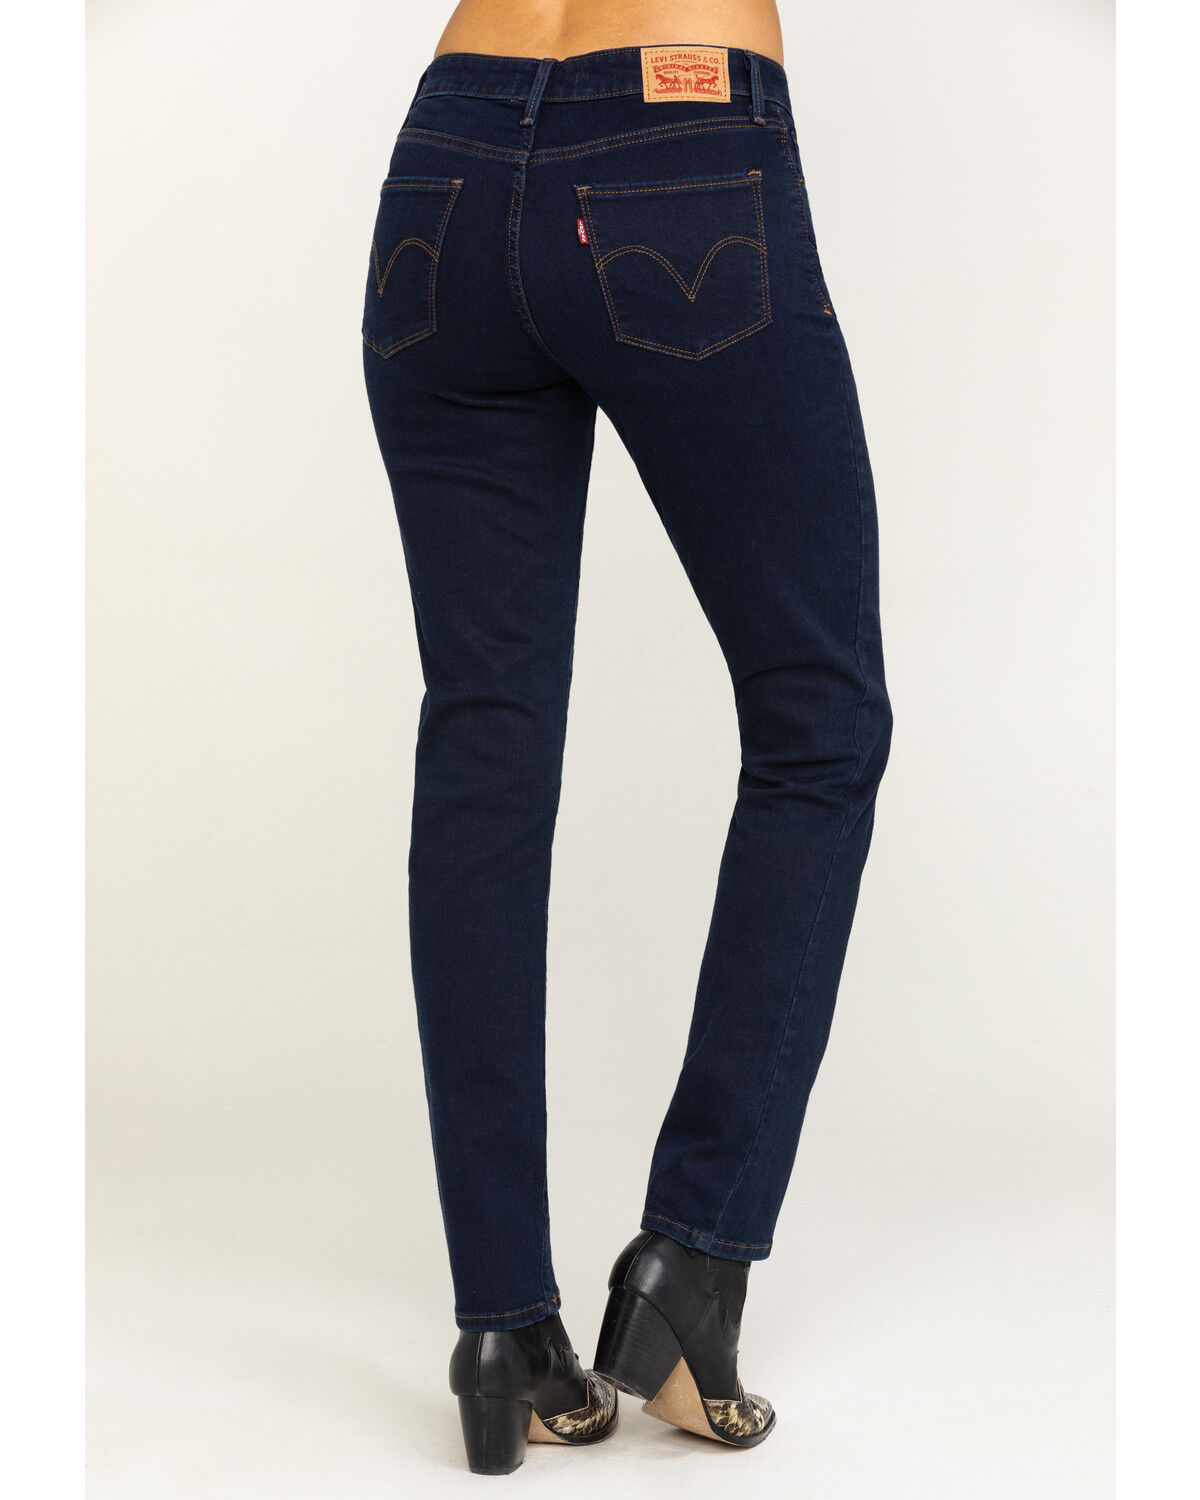 levis skinny jeans womens